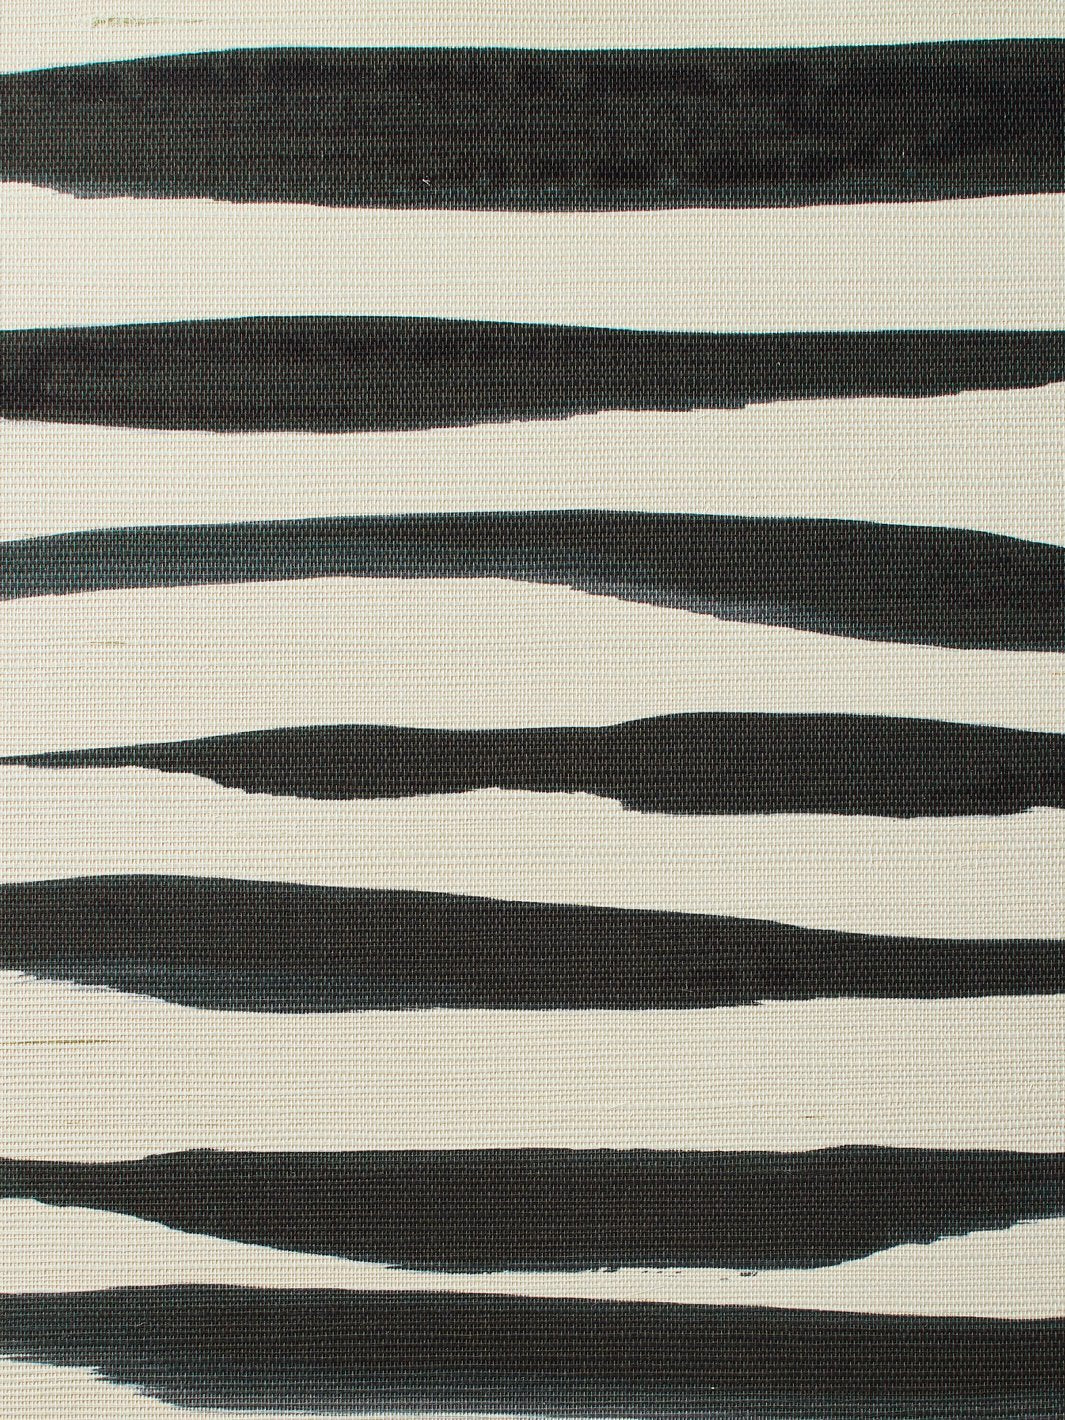 'Watercolor Weave Large' Grasscloth' Wallpaper by Wallshoppe - Black